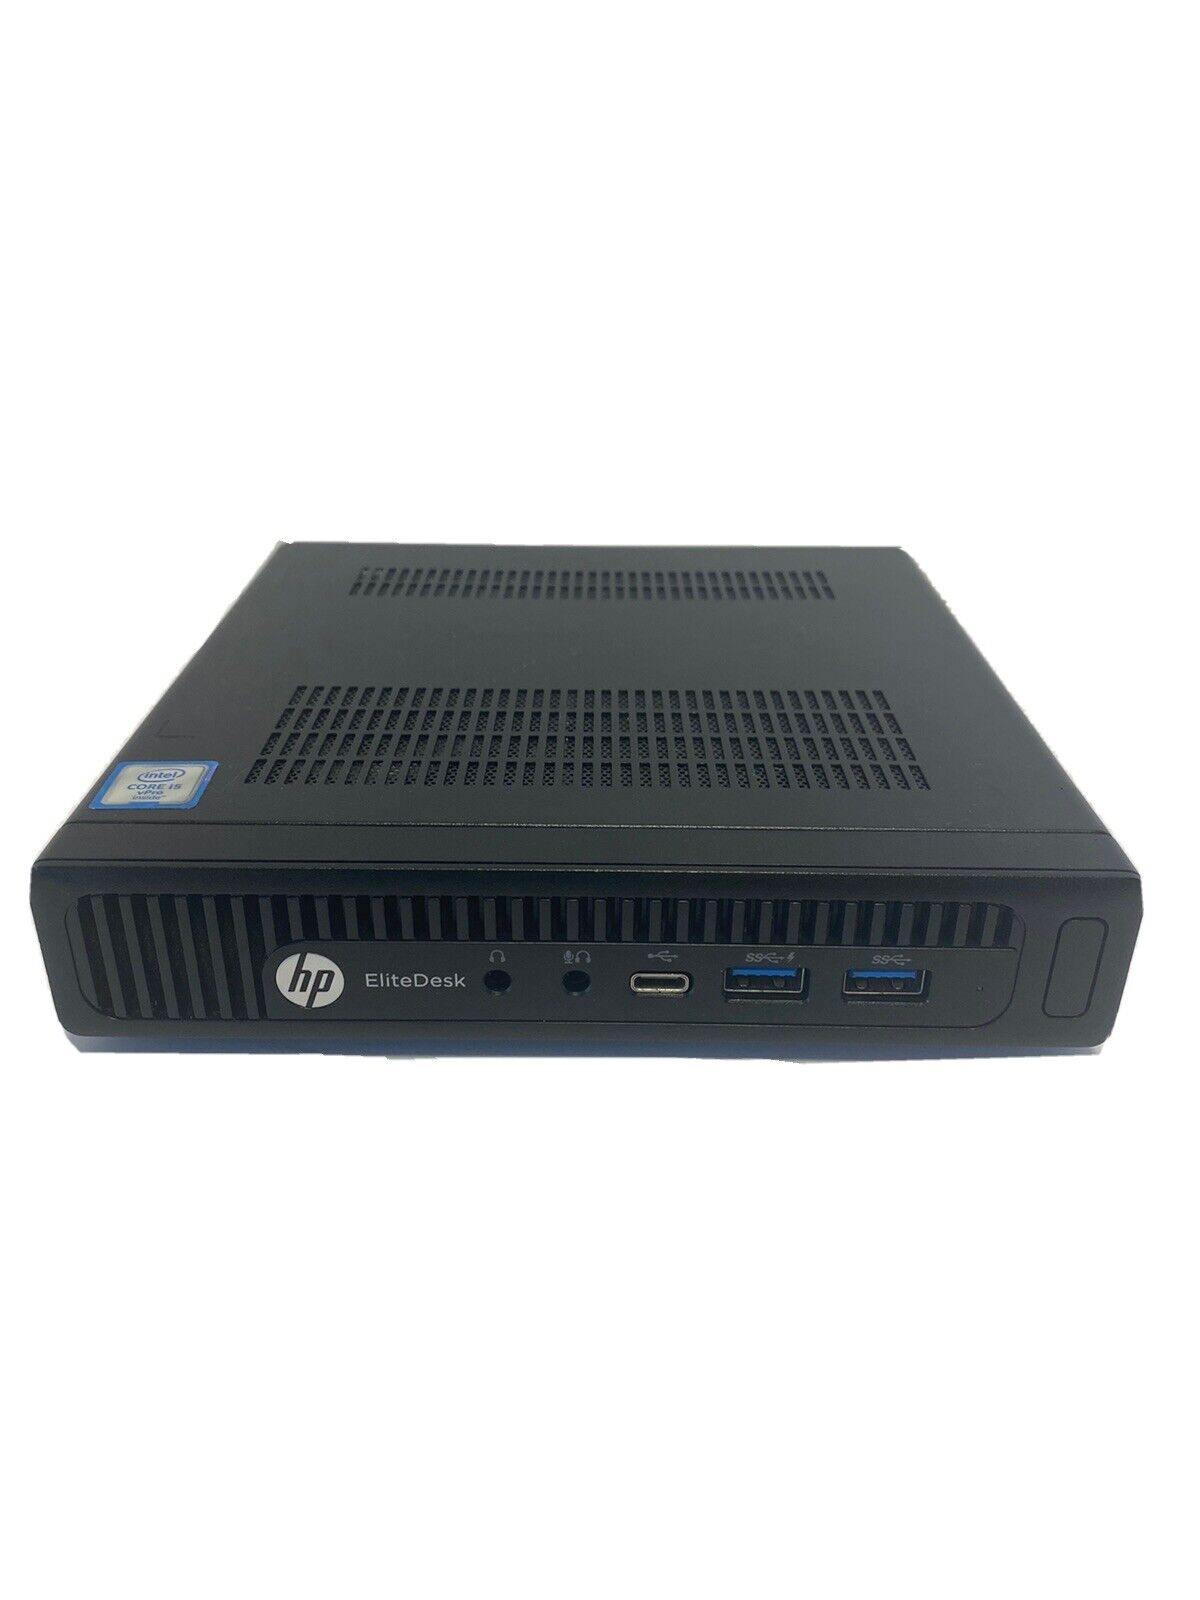 HP EliteDesk 800 G2 (Intel Core i5-6500 3.2GHz 8GB) Mini PC Desktop WiFi